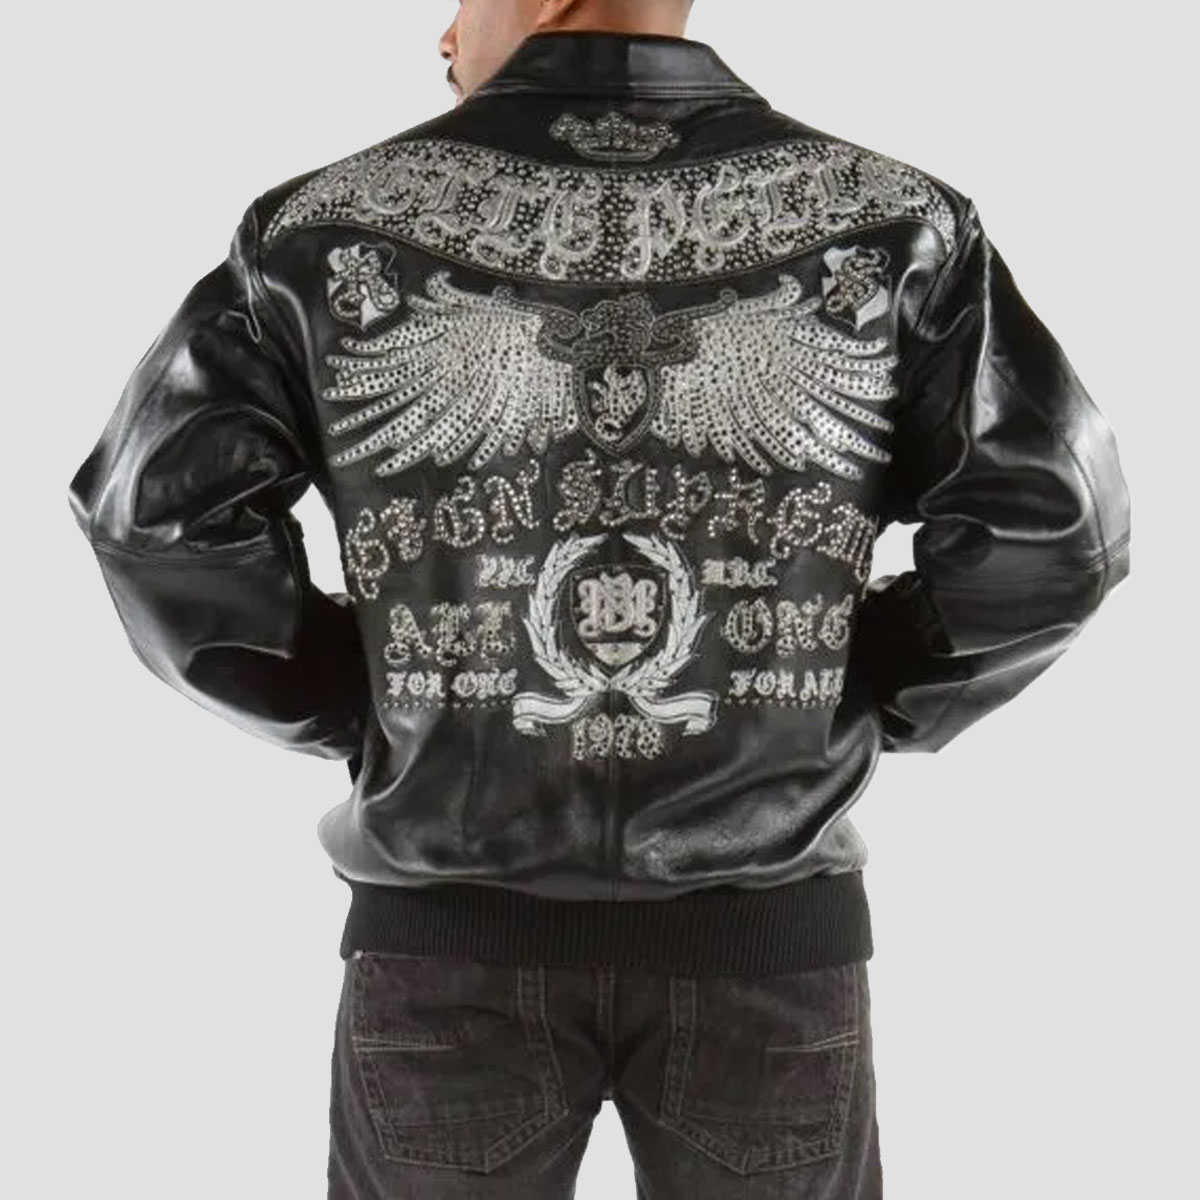 supreme leather jacket